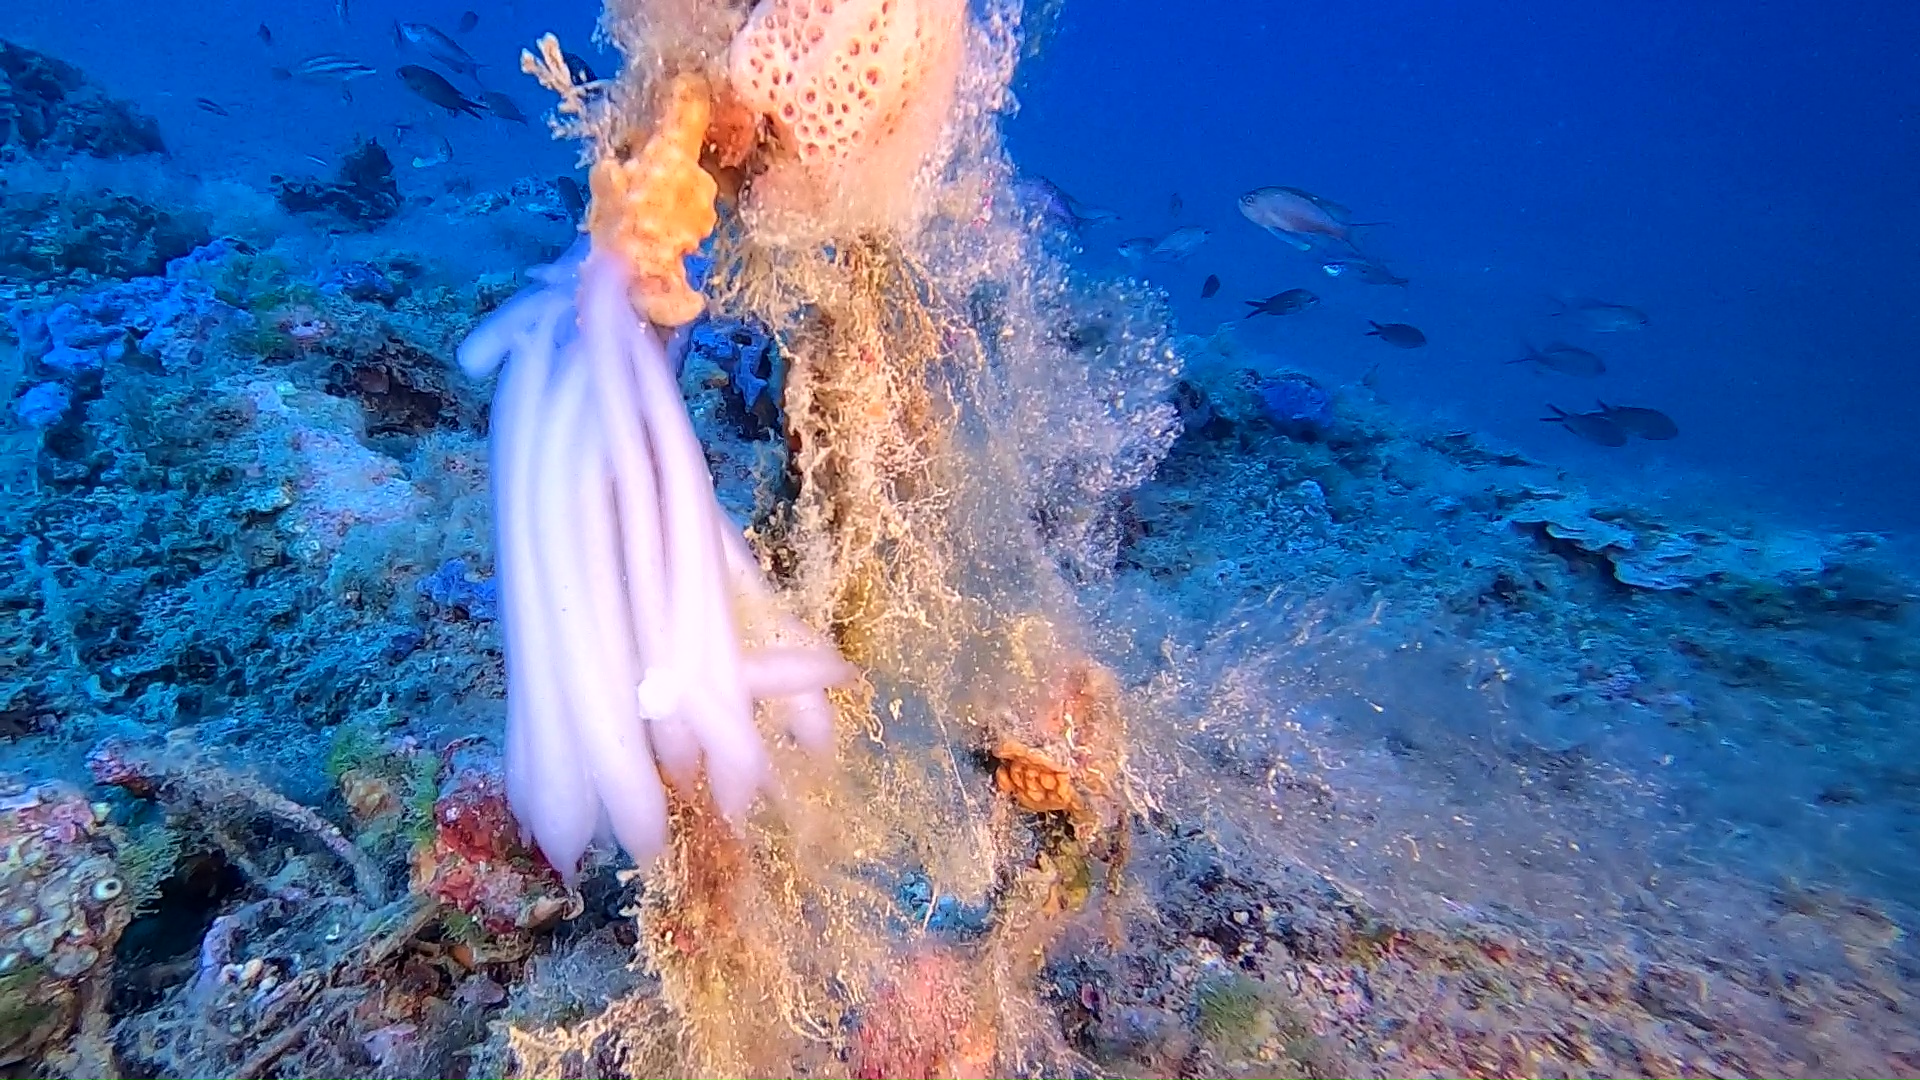 Squid eggs - Uova di Calamaro - www.intotheblue.it - Ghost nets - Rete fantasma